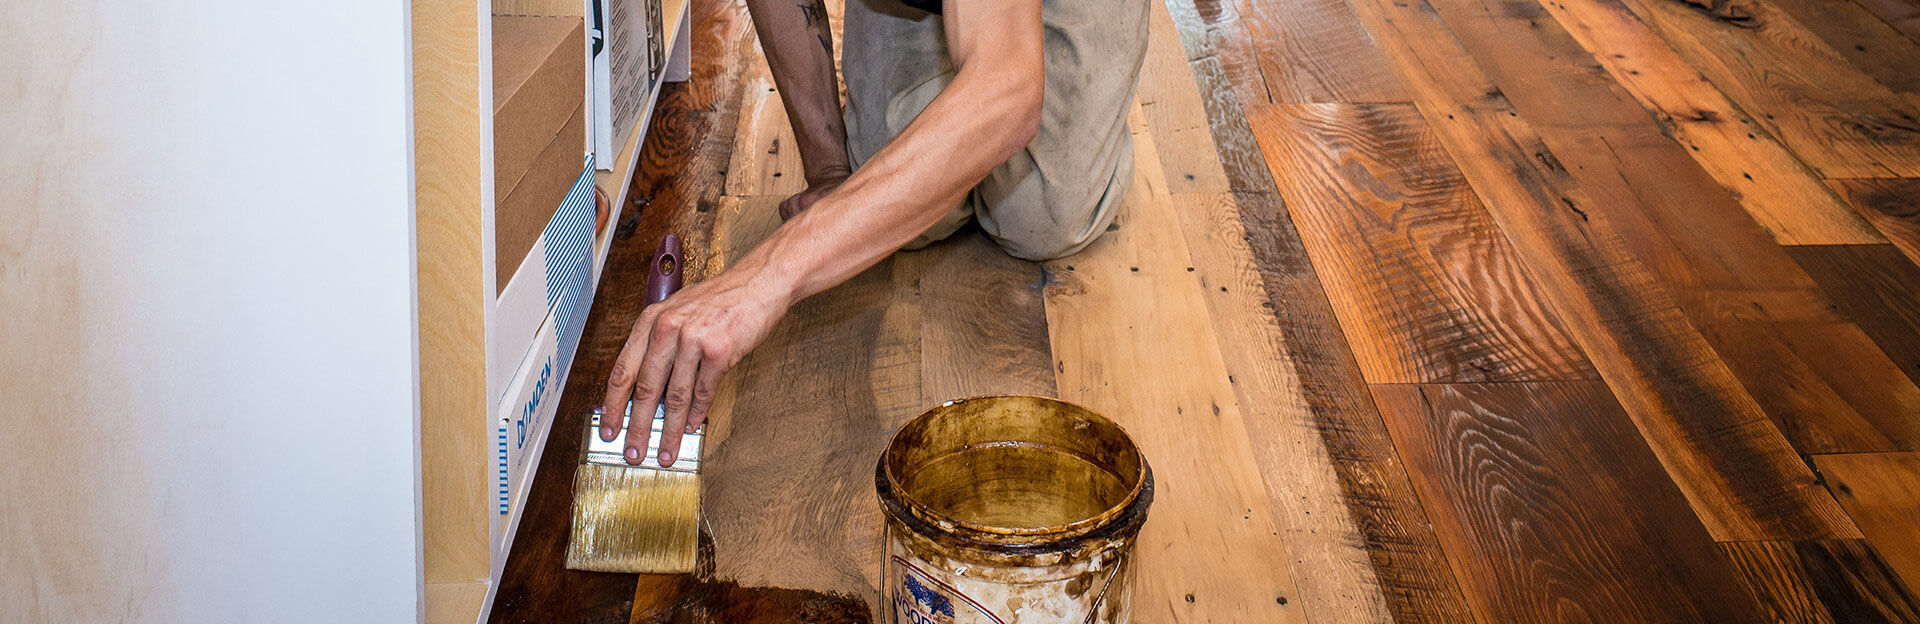 Applying finish on a freshly sanded wood floor